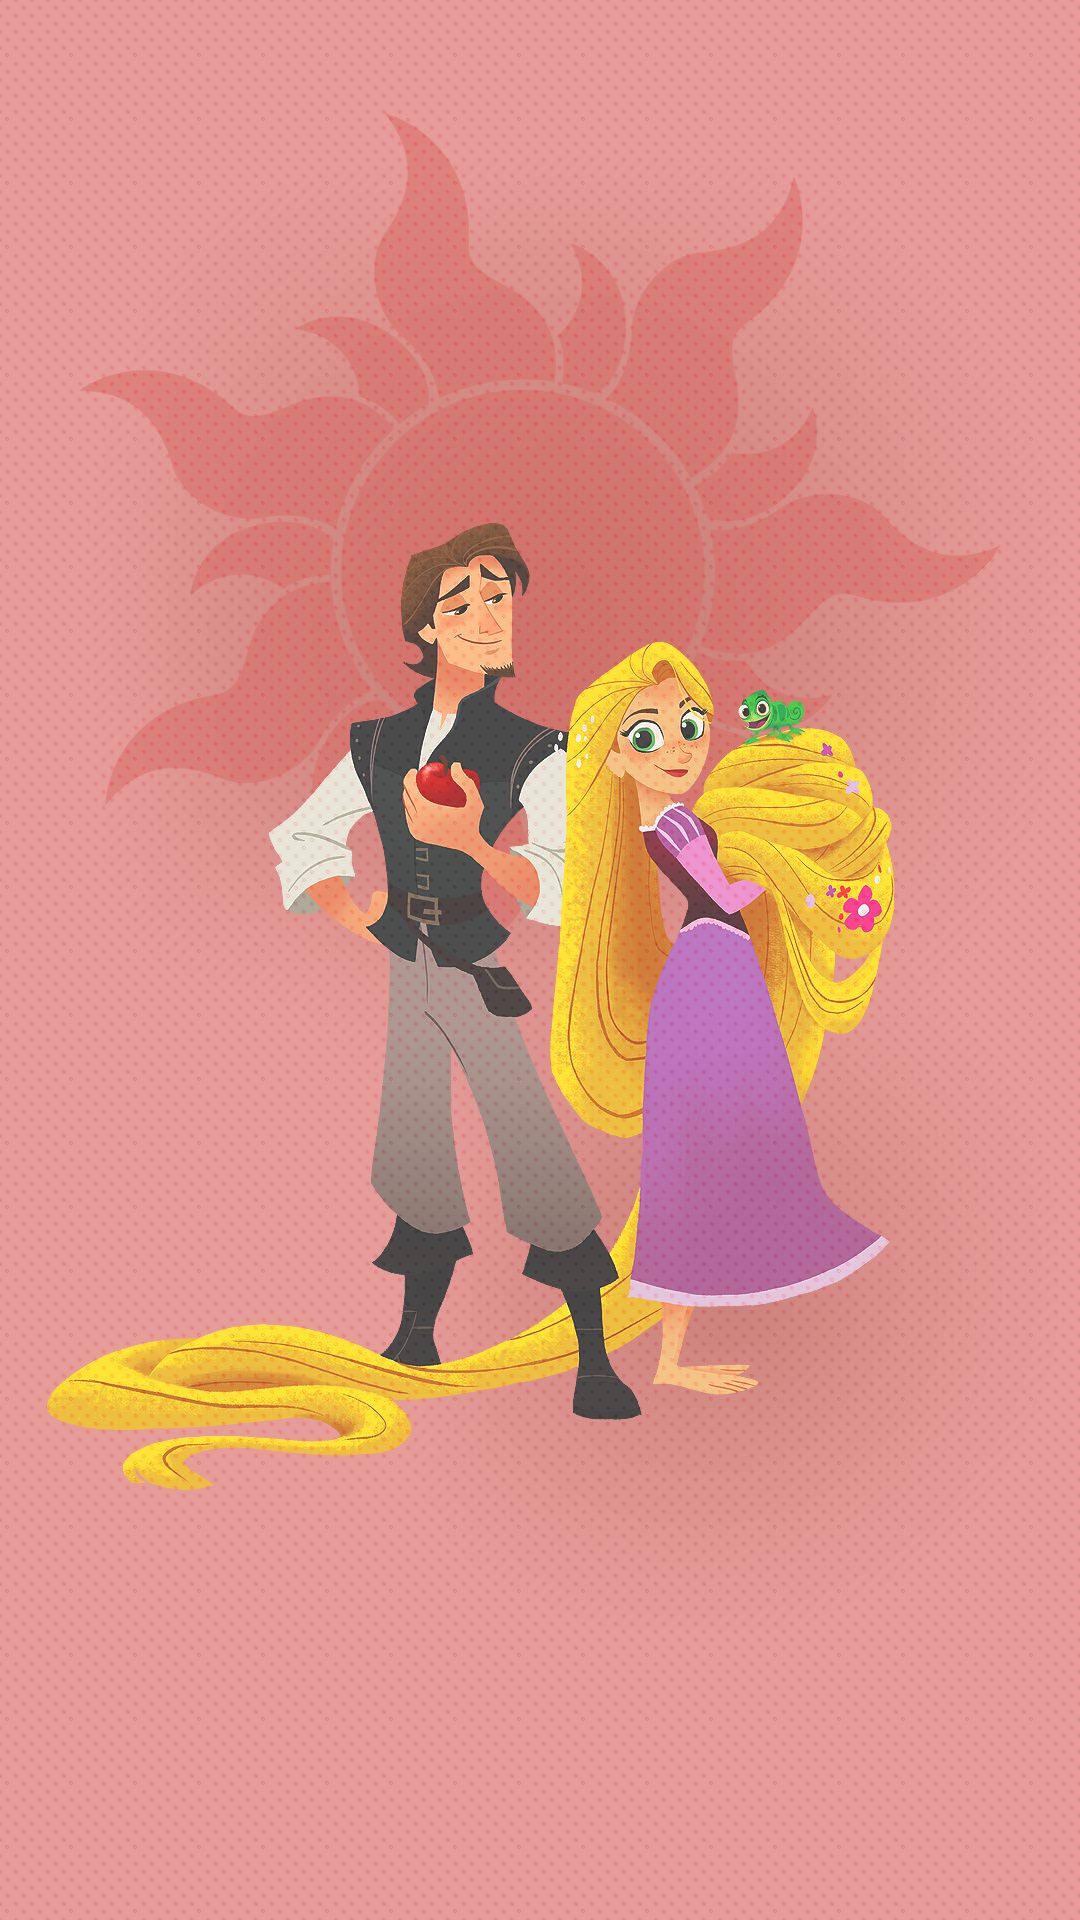 Rapunzel Tangled Adventure